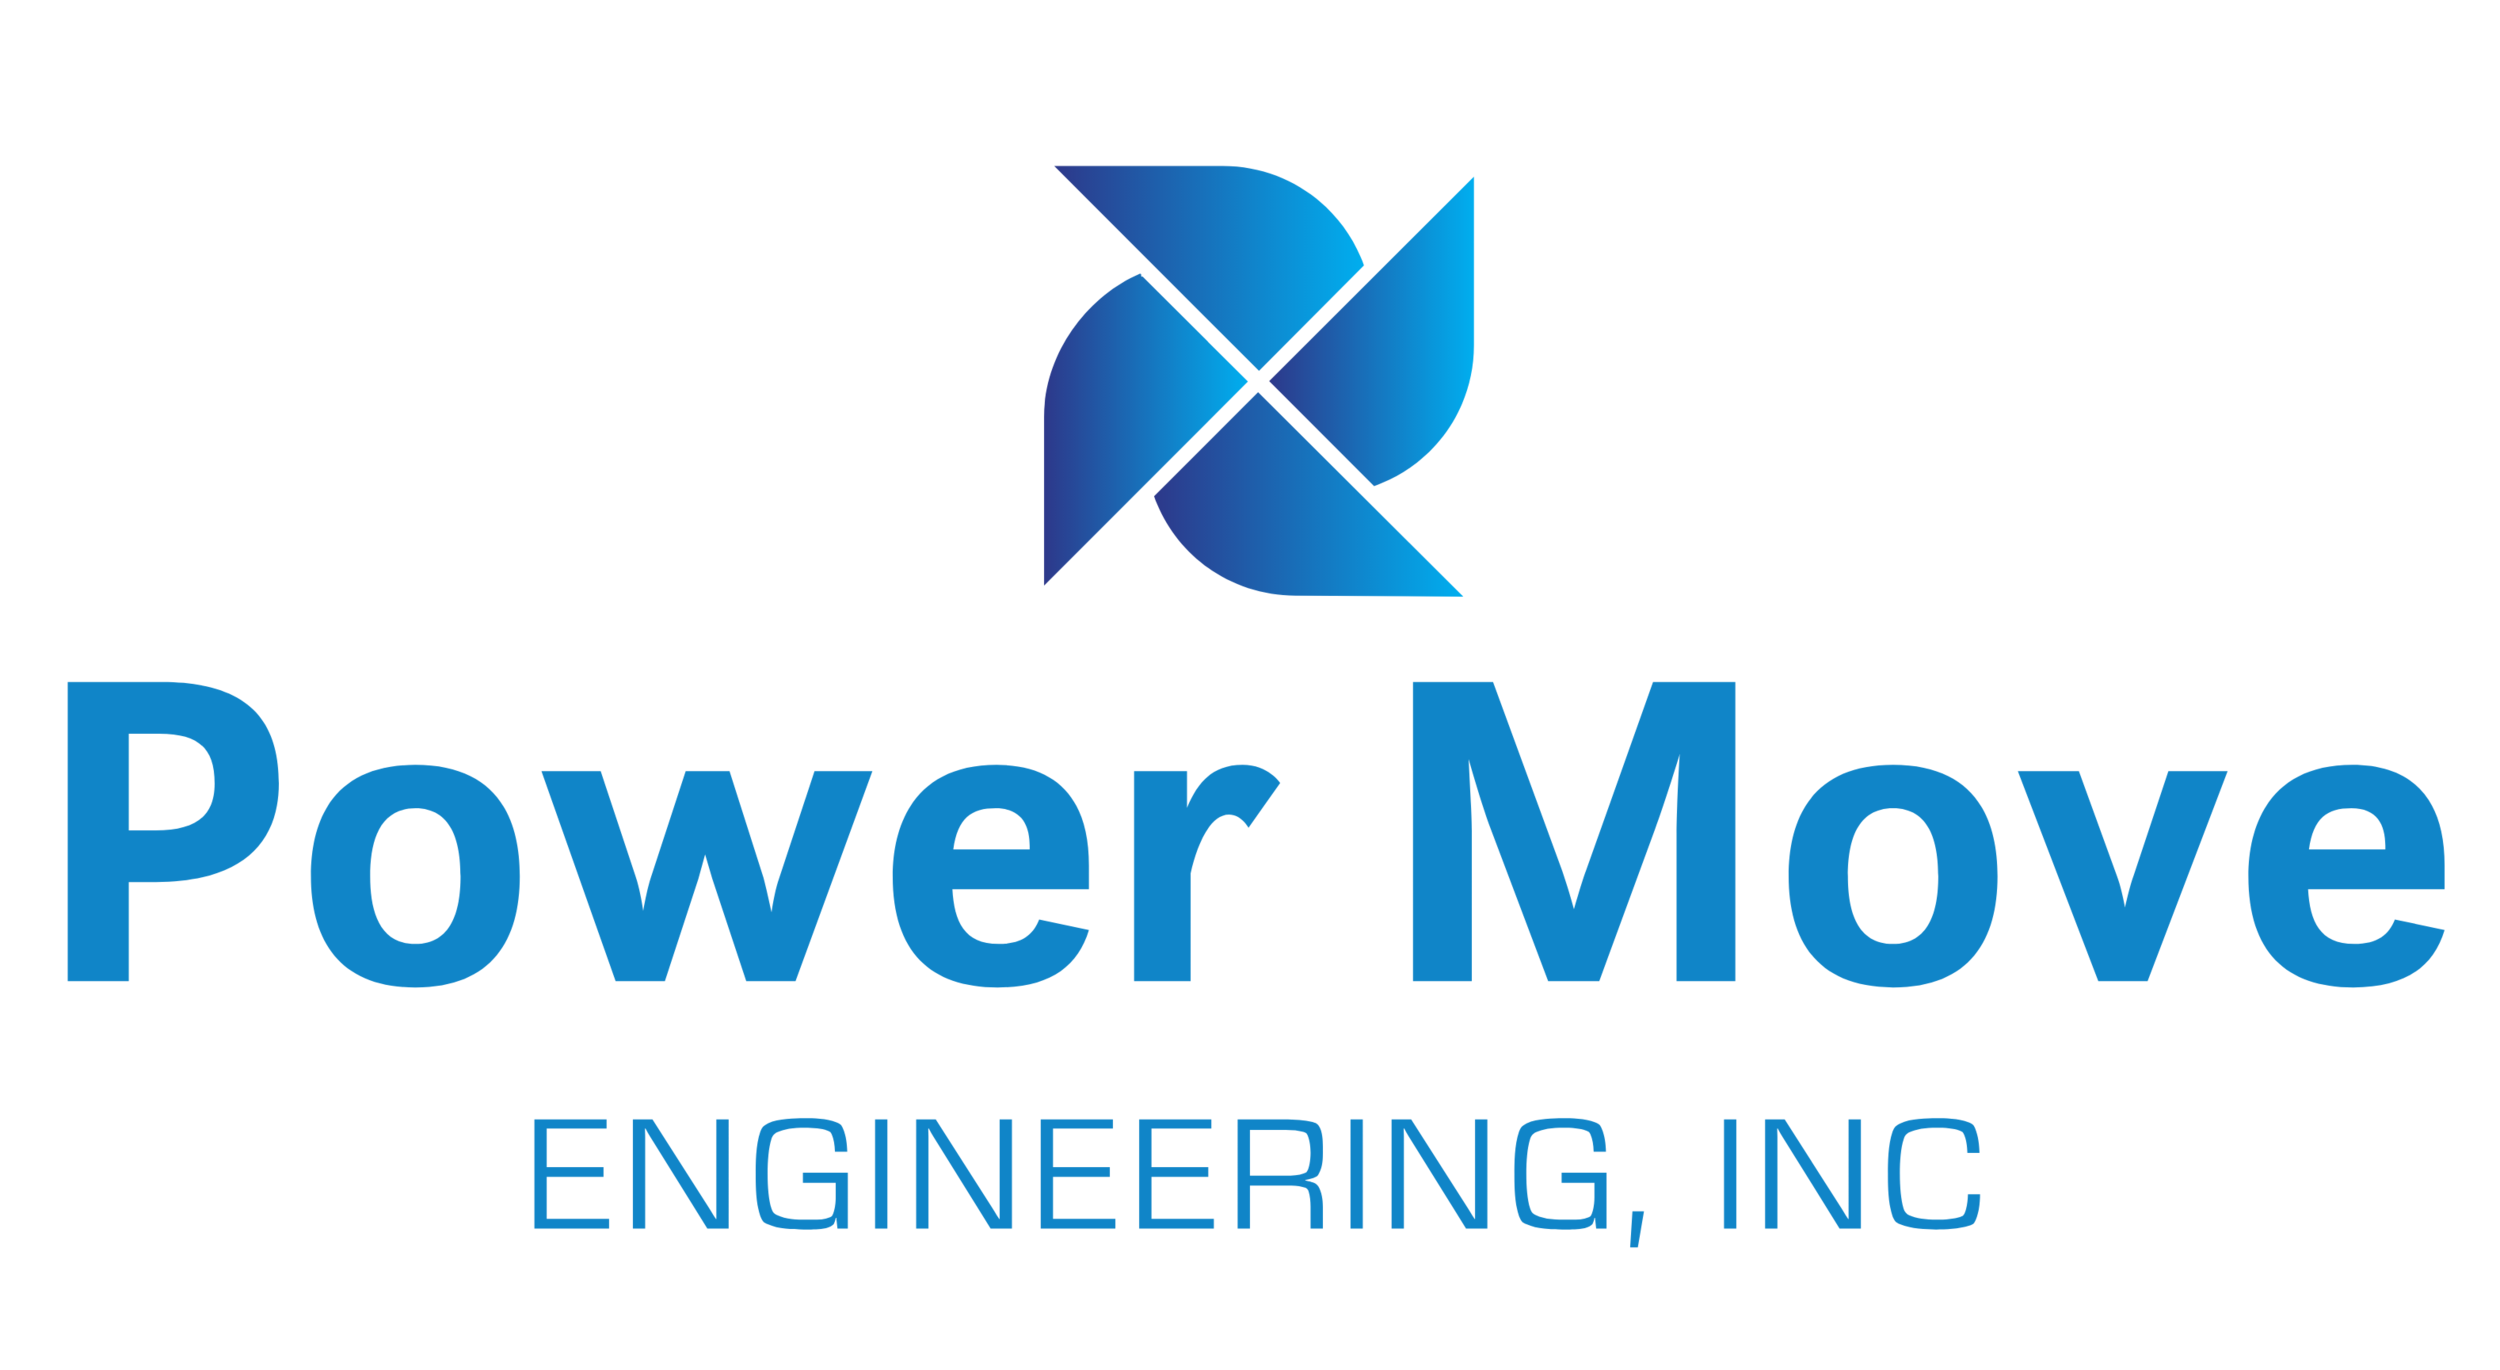 Power Move Engineering